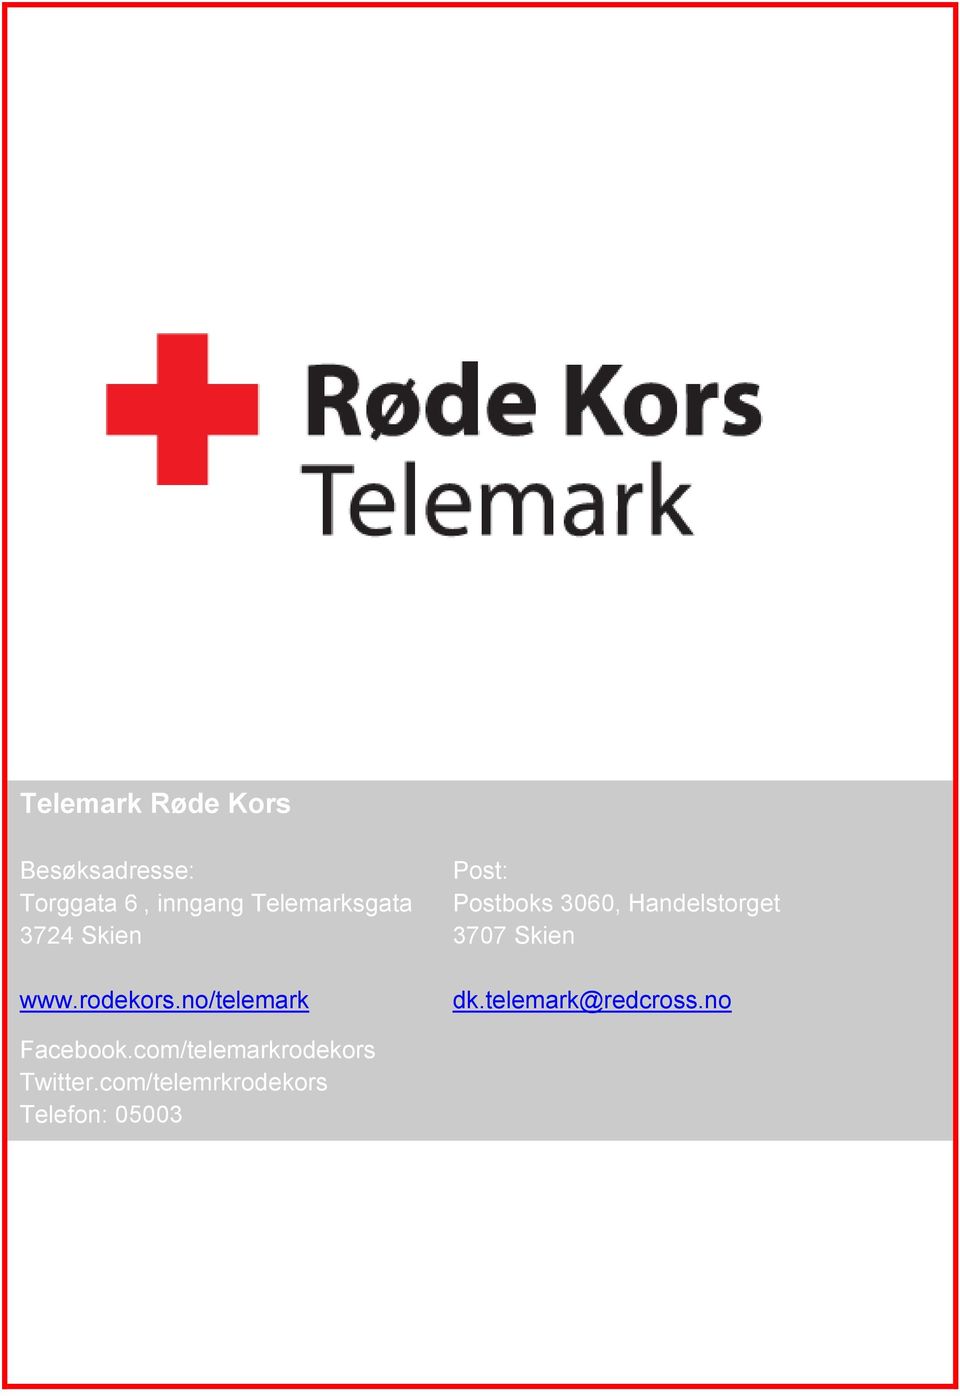 Skien www.rodekors.no/telemark dk.telemark@redcross.